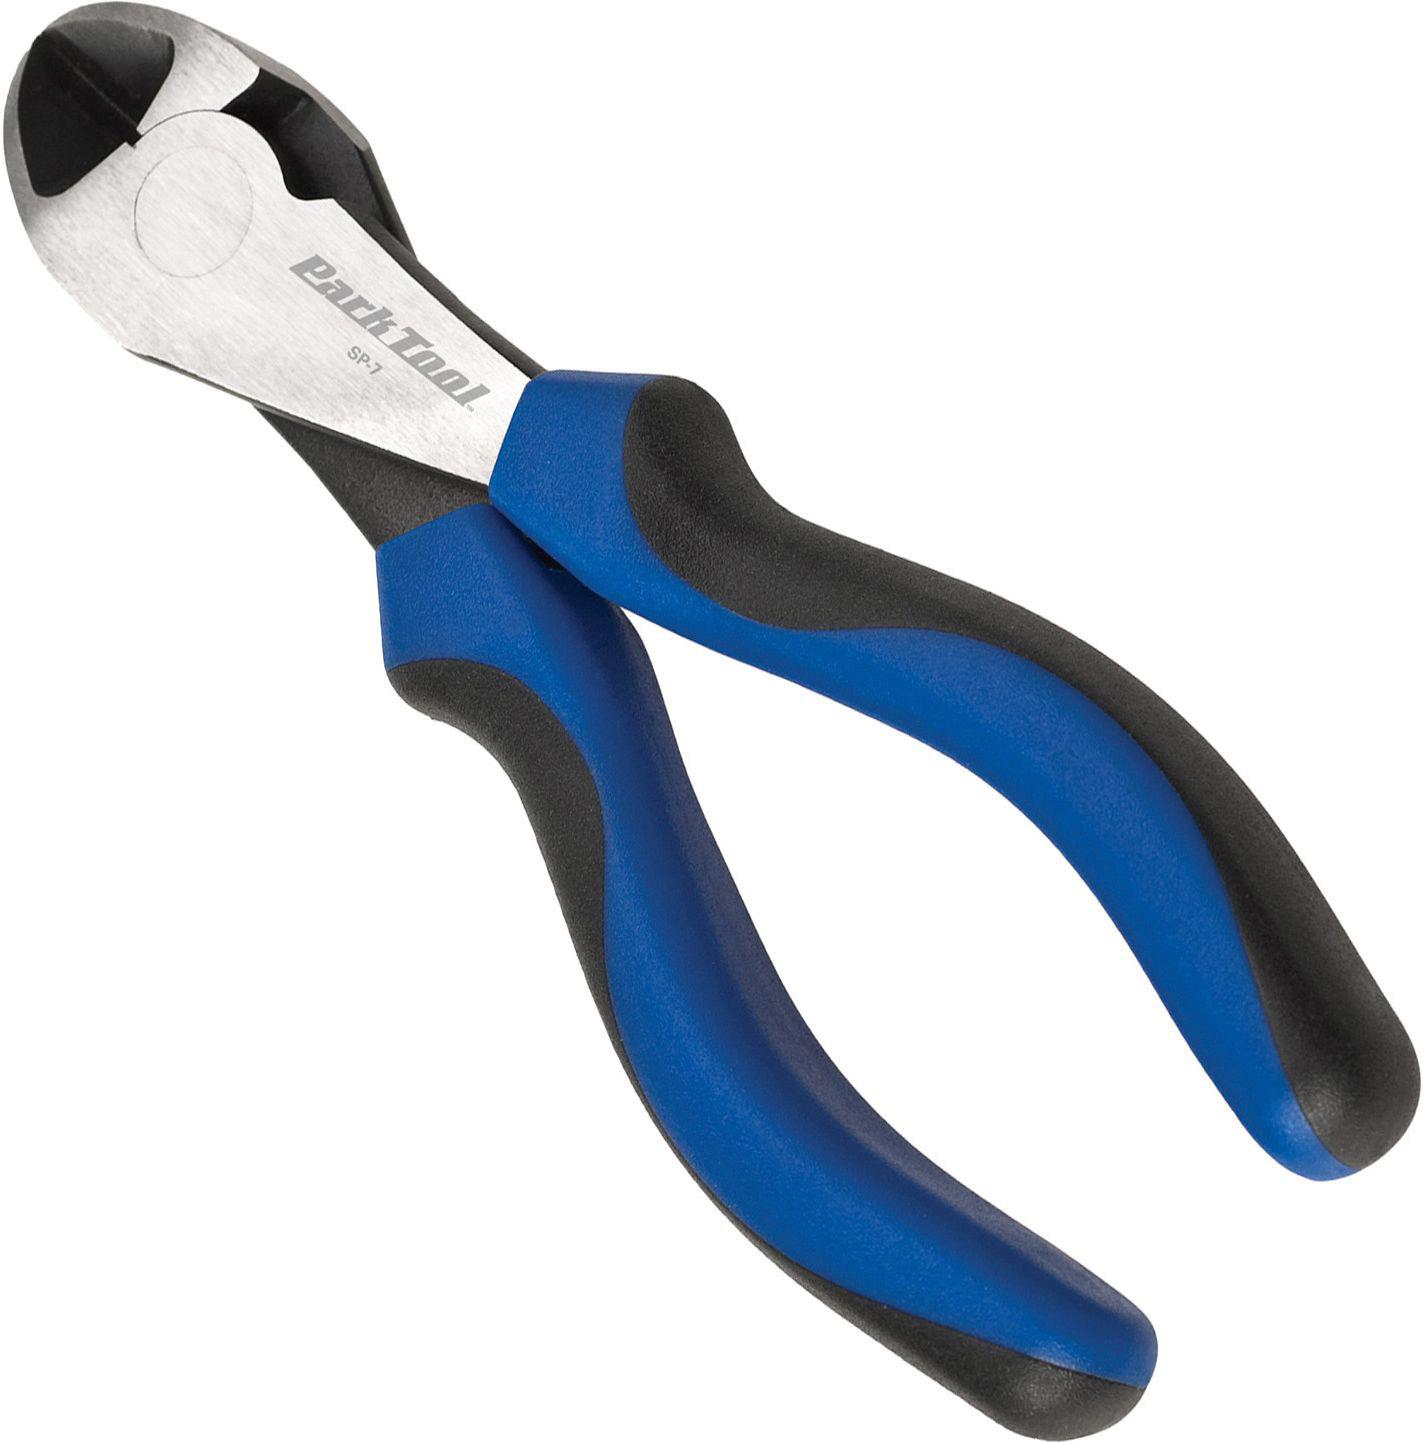 Park Tool Side Cutter Pliers - Blue/black